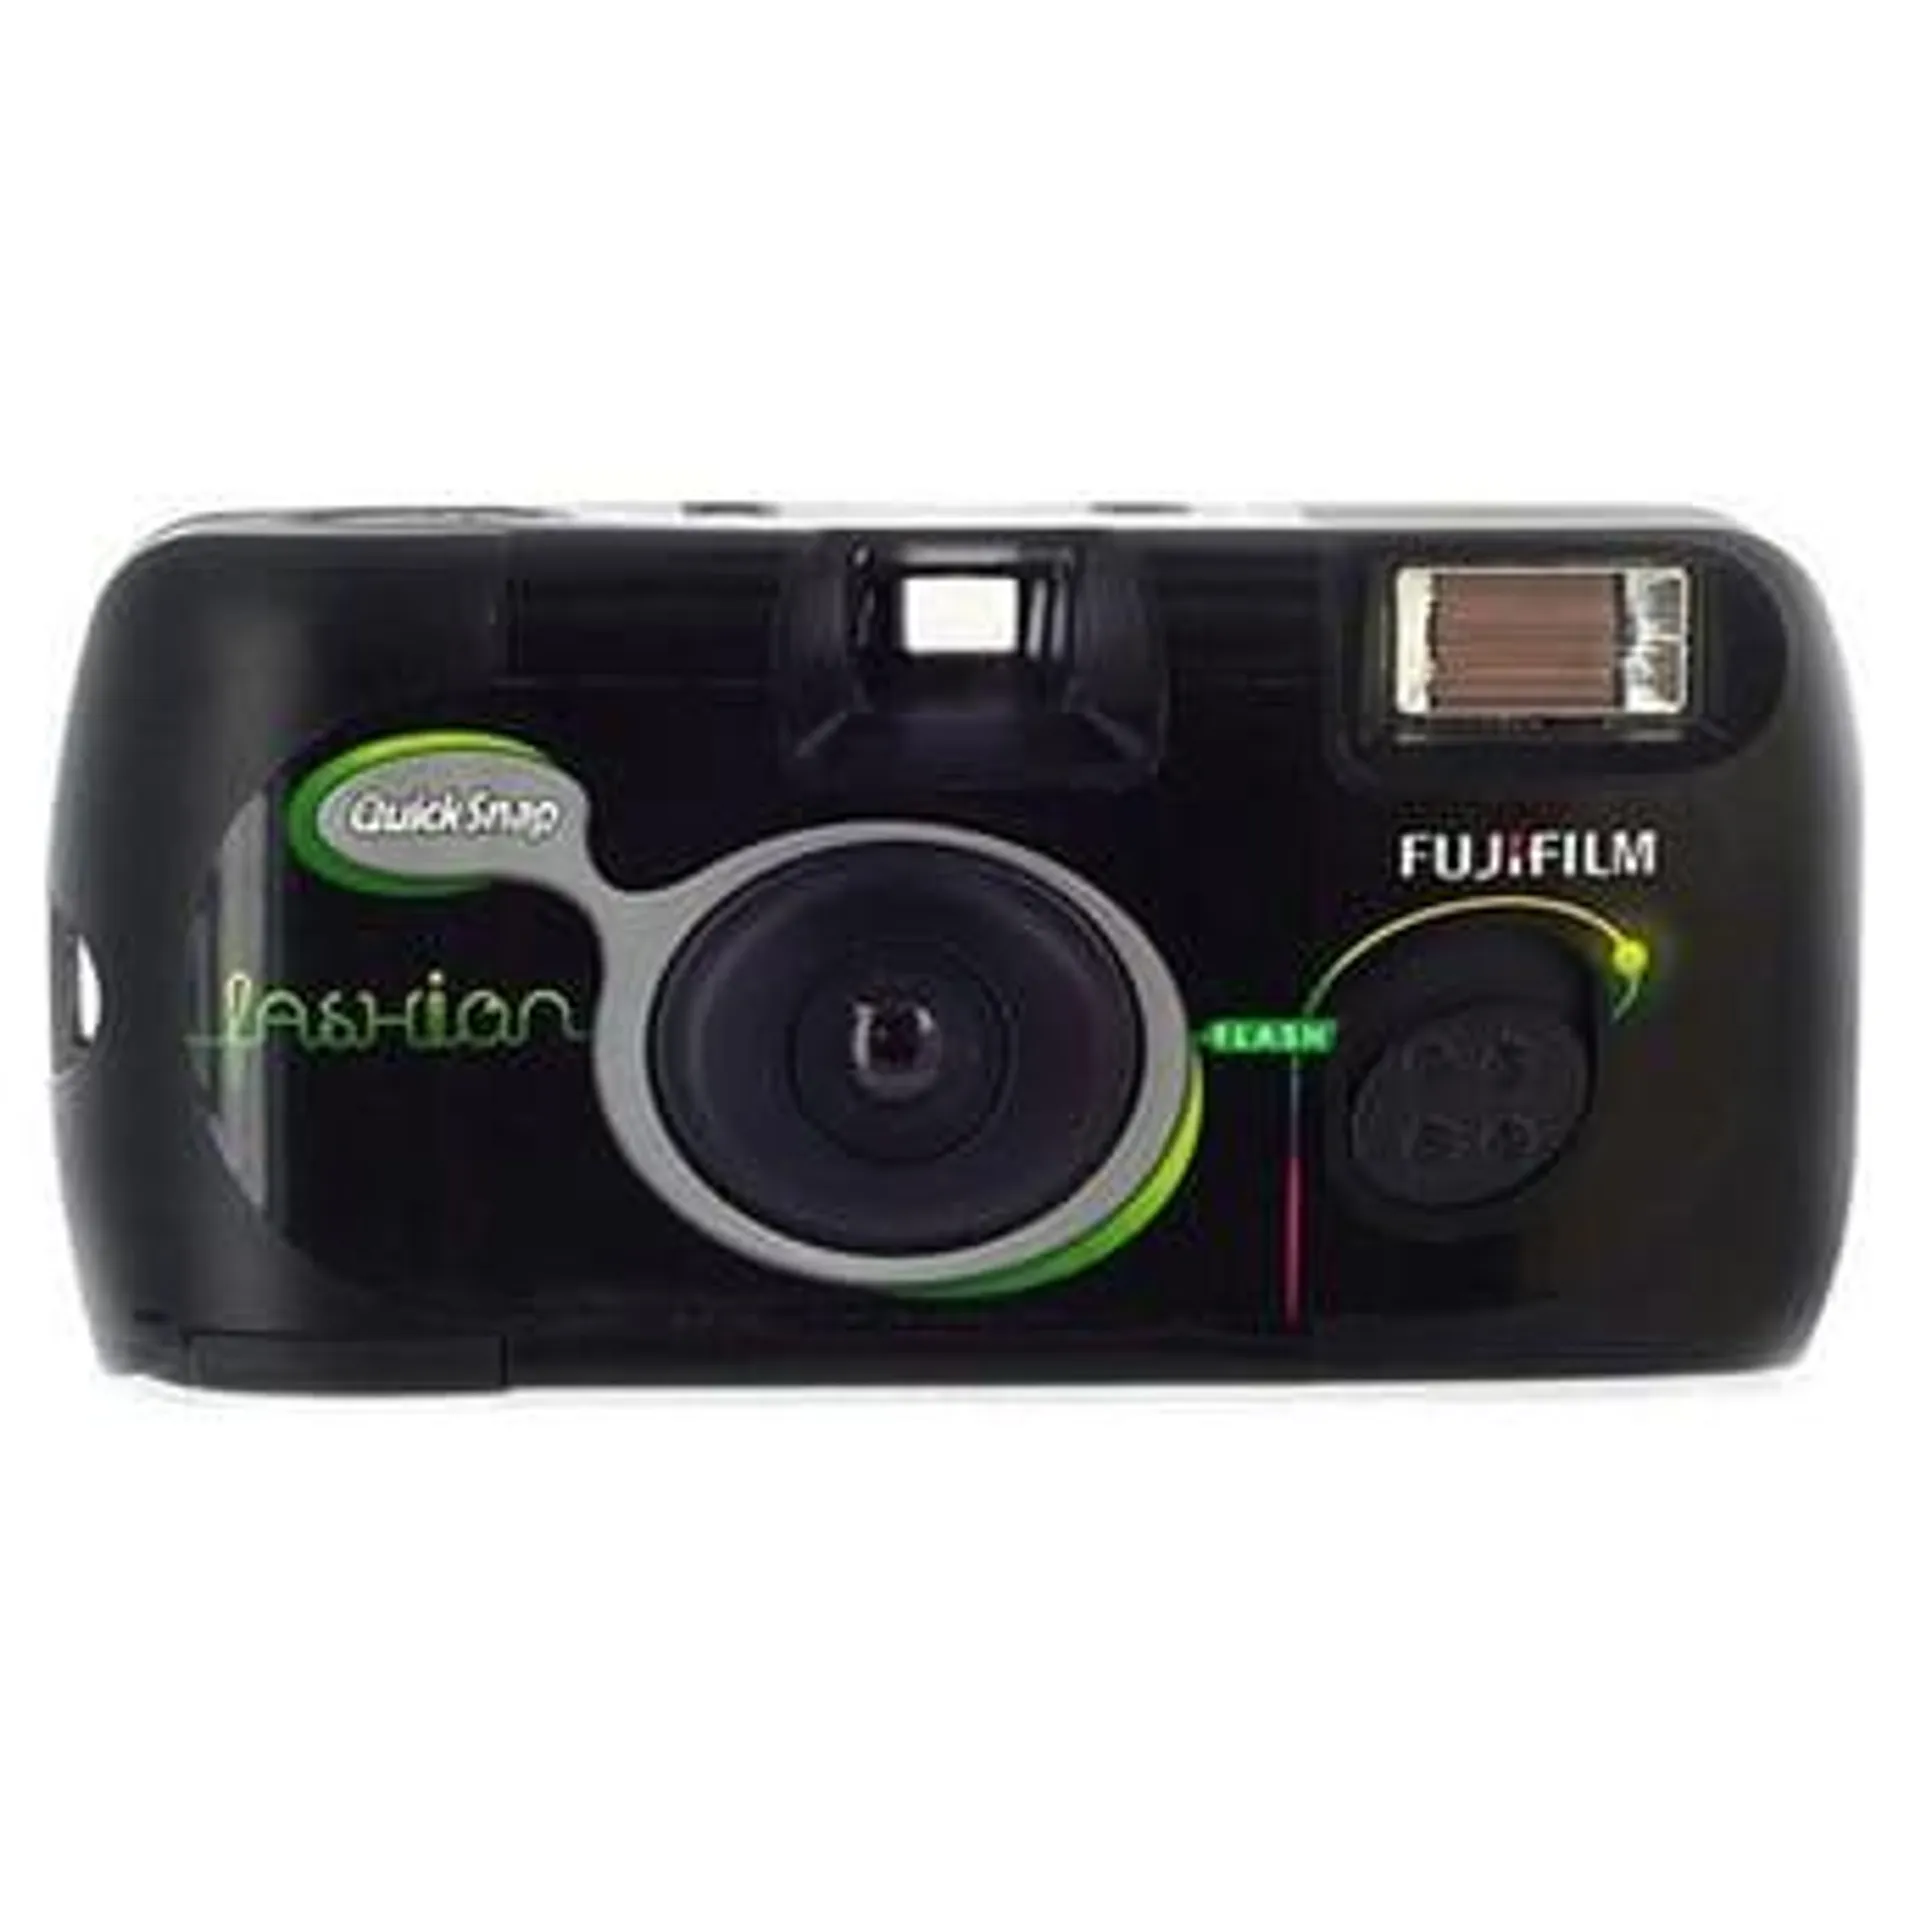 Fujifilm Quicksnap Fashion Disposable Camera with Flash (2-Pack)